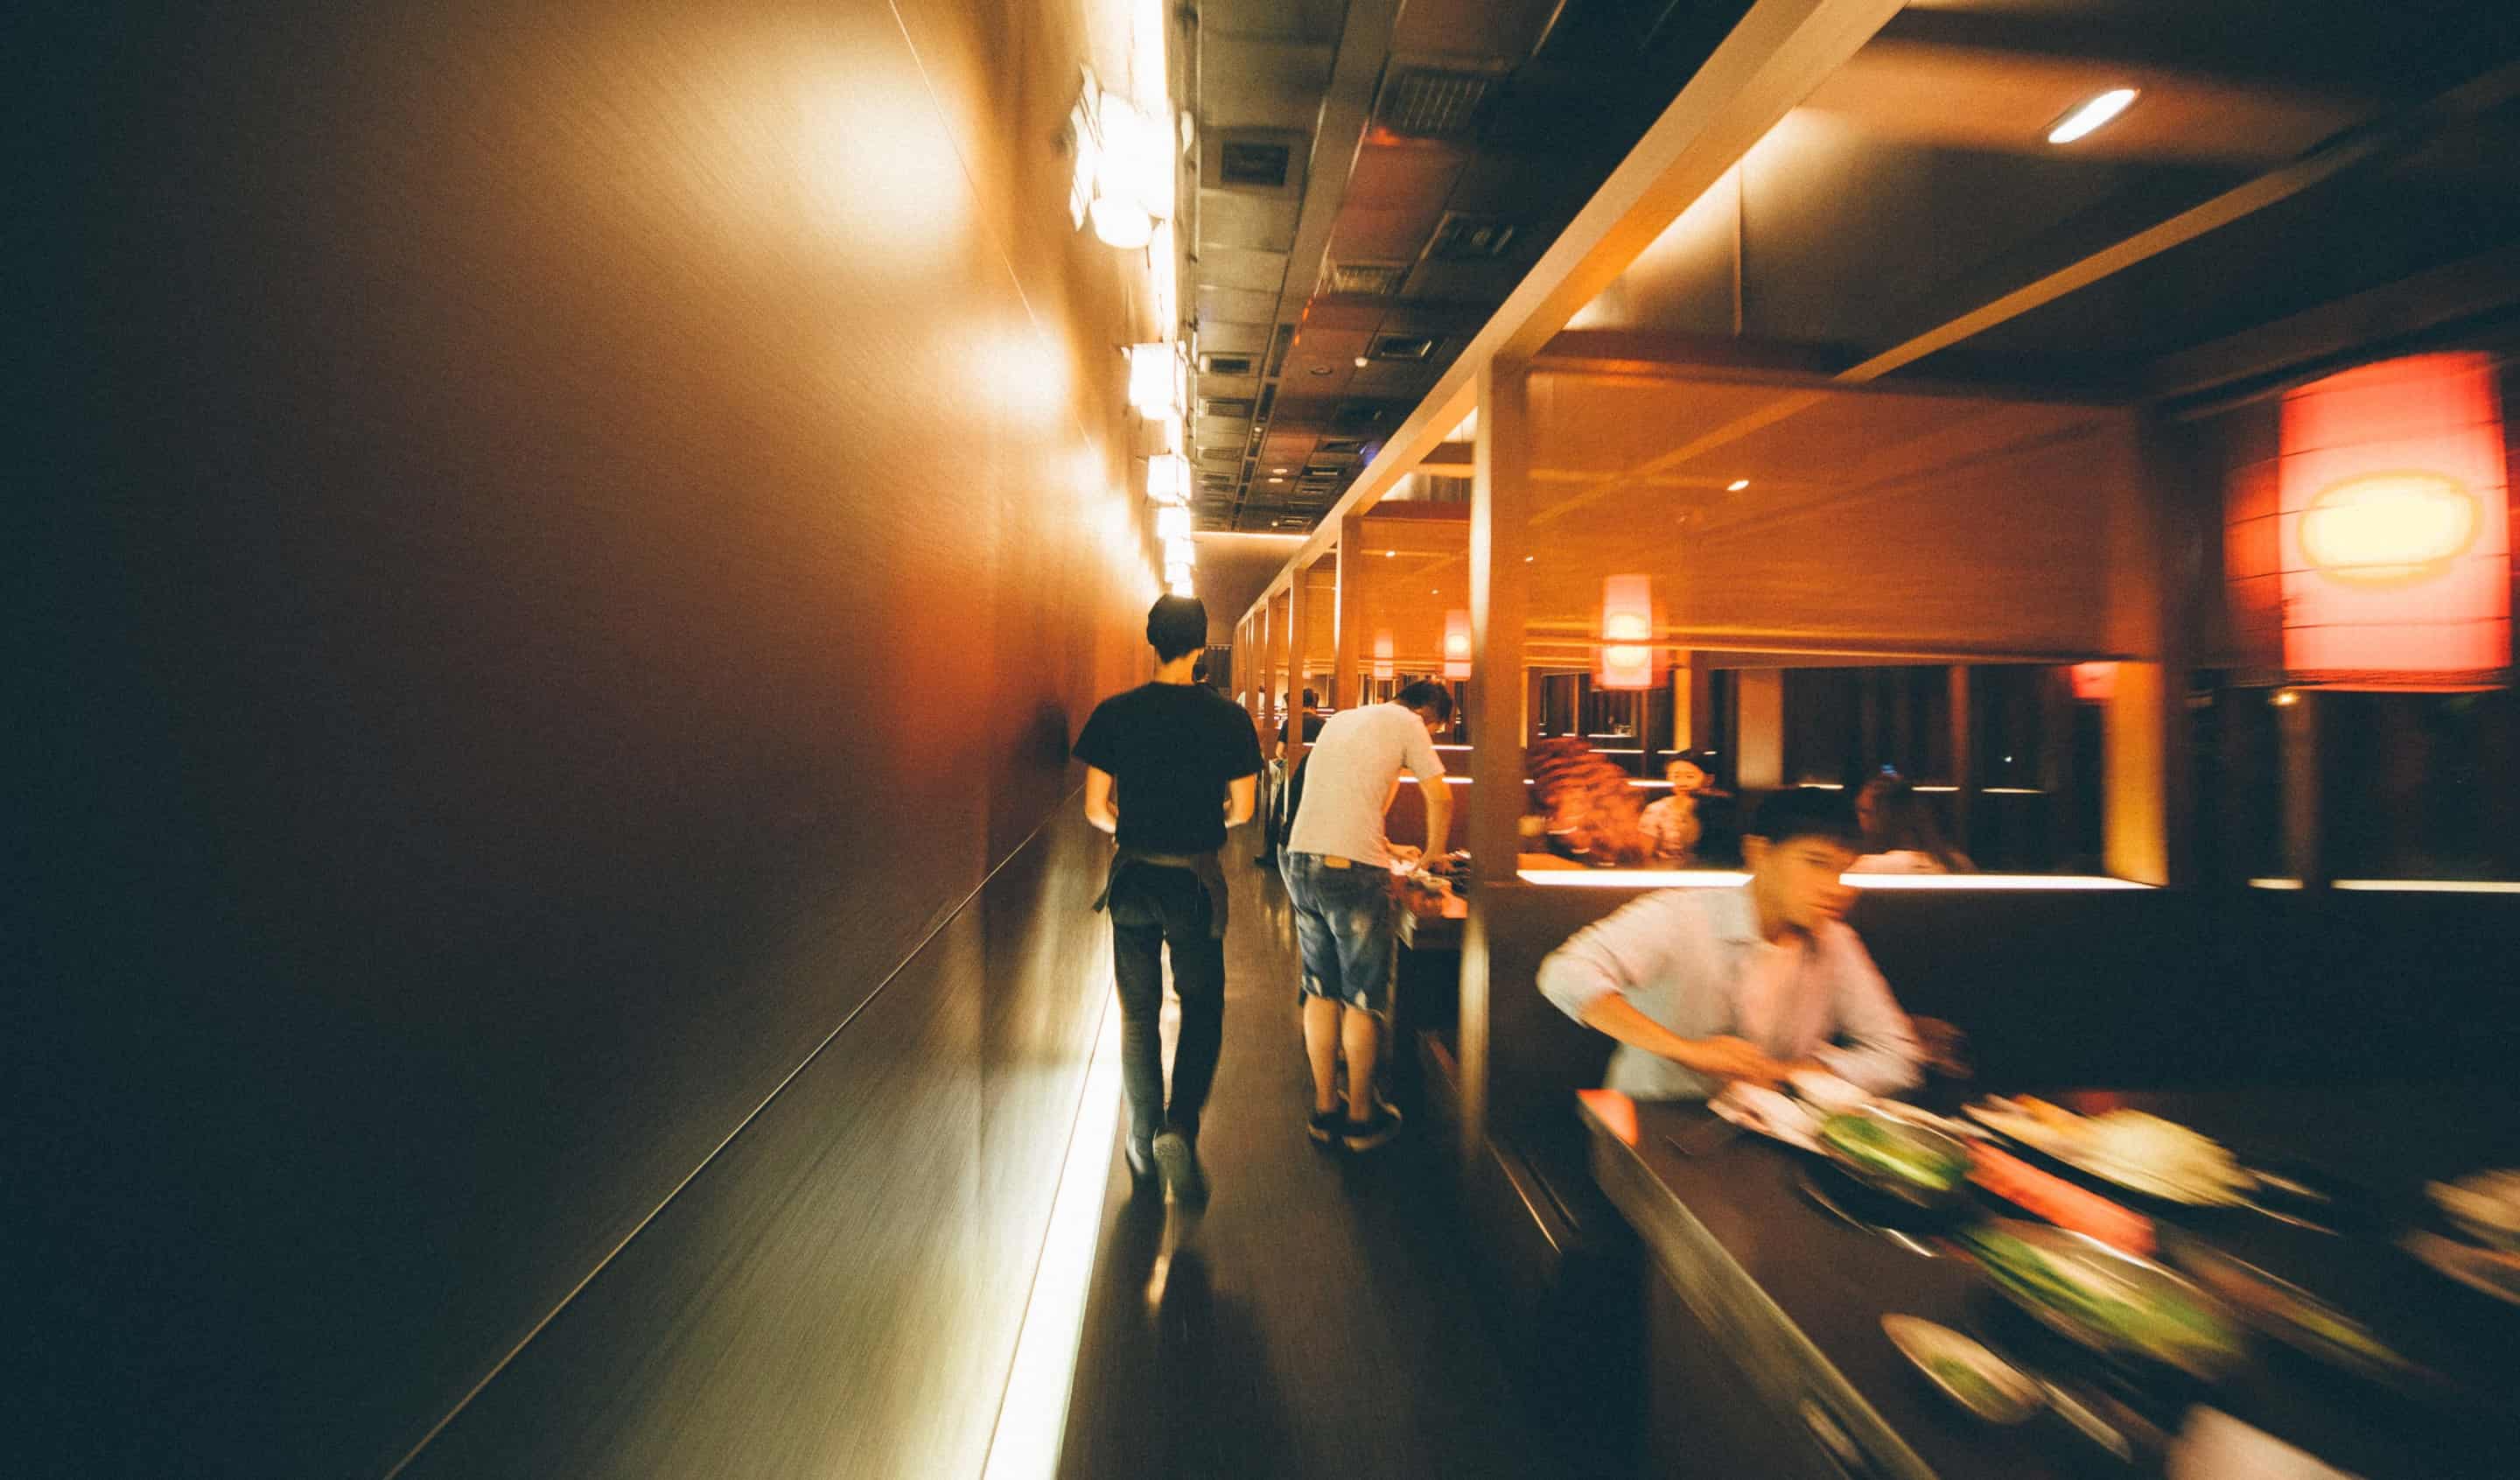 restaurant server walking by tables